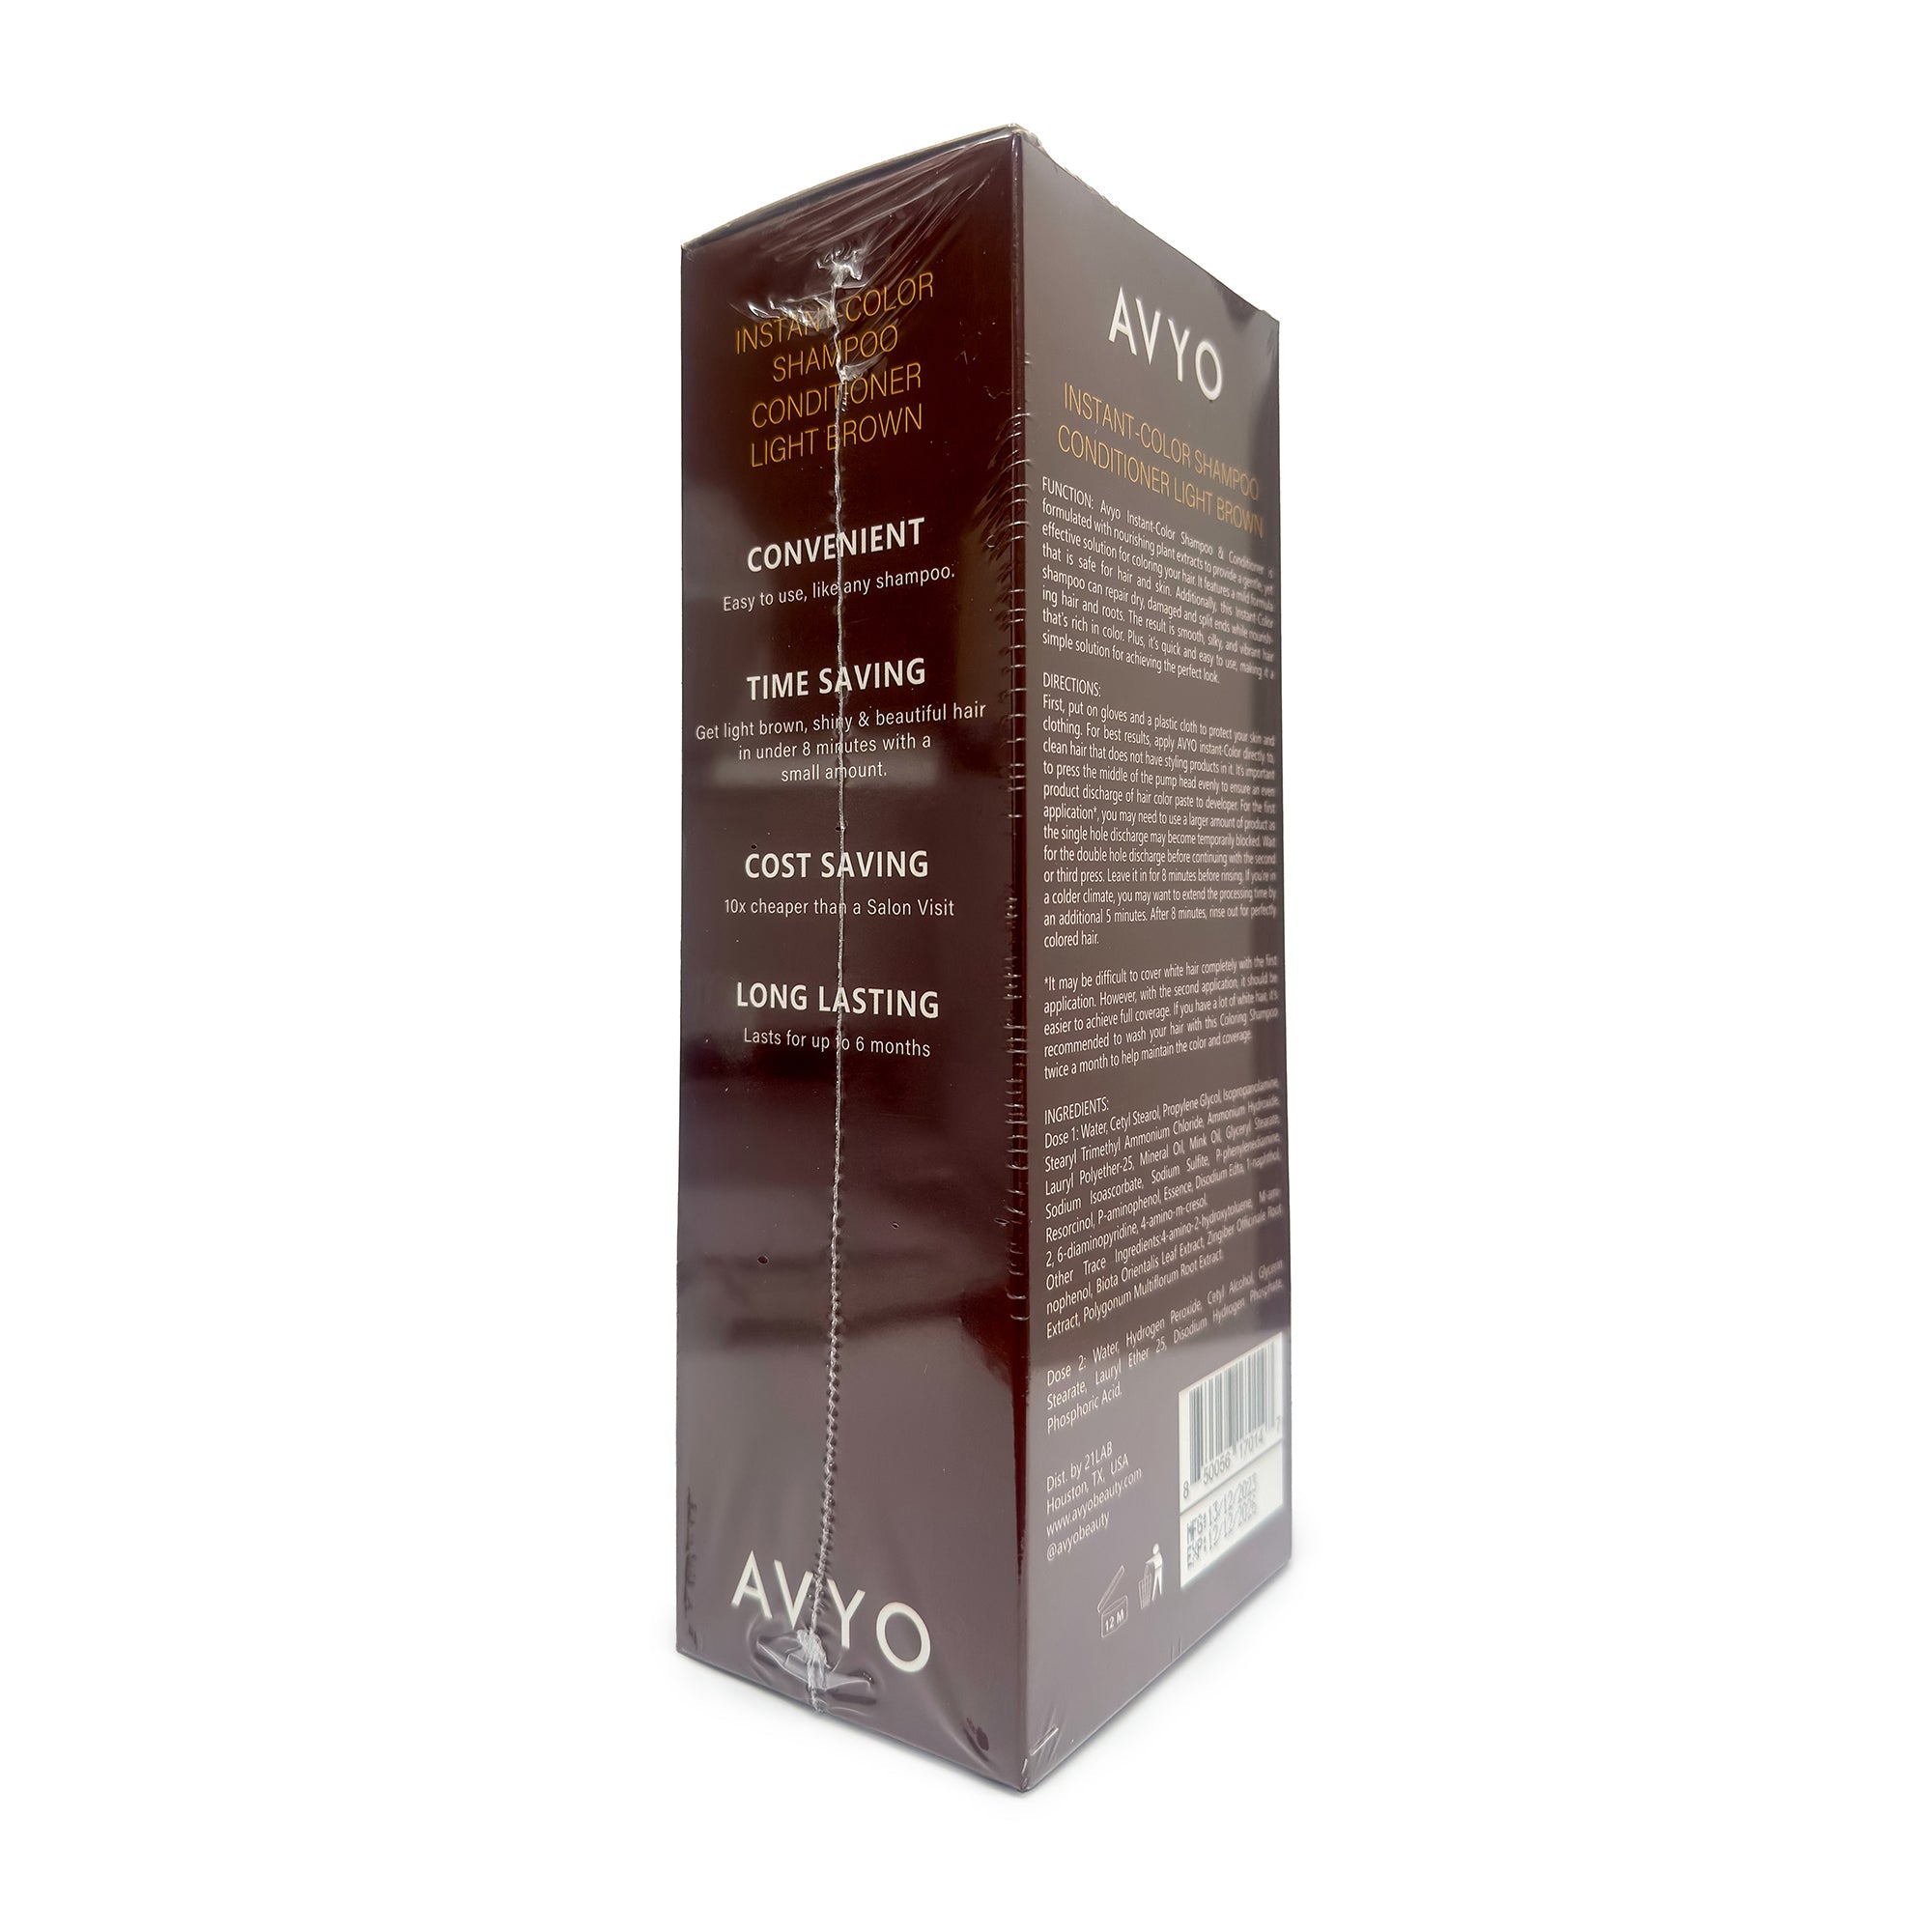 Light Brown | Instant-Color Shampoo Conditioner | 5 in 1 | 500 mL - 16.91 fl.oz. | AVYO - SH Salons